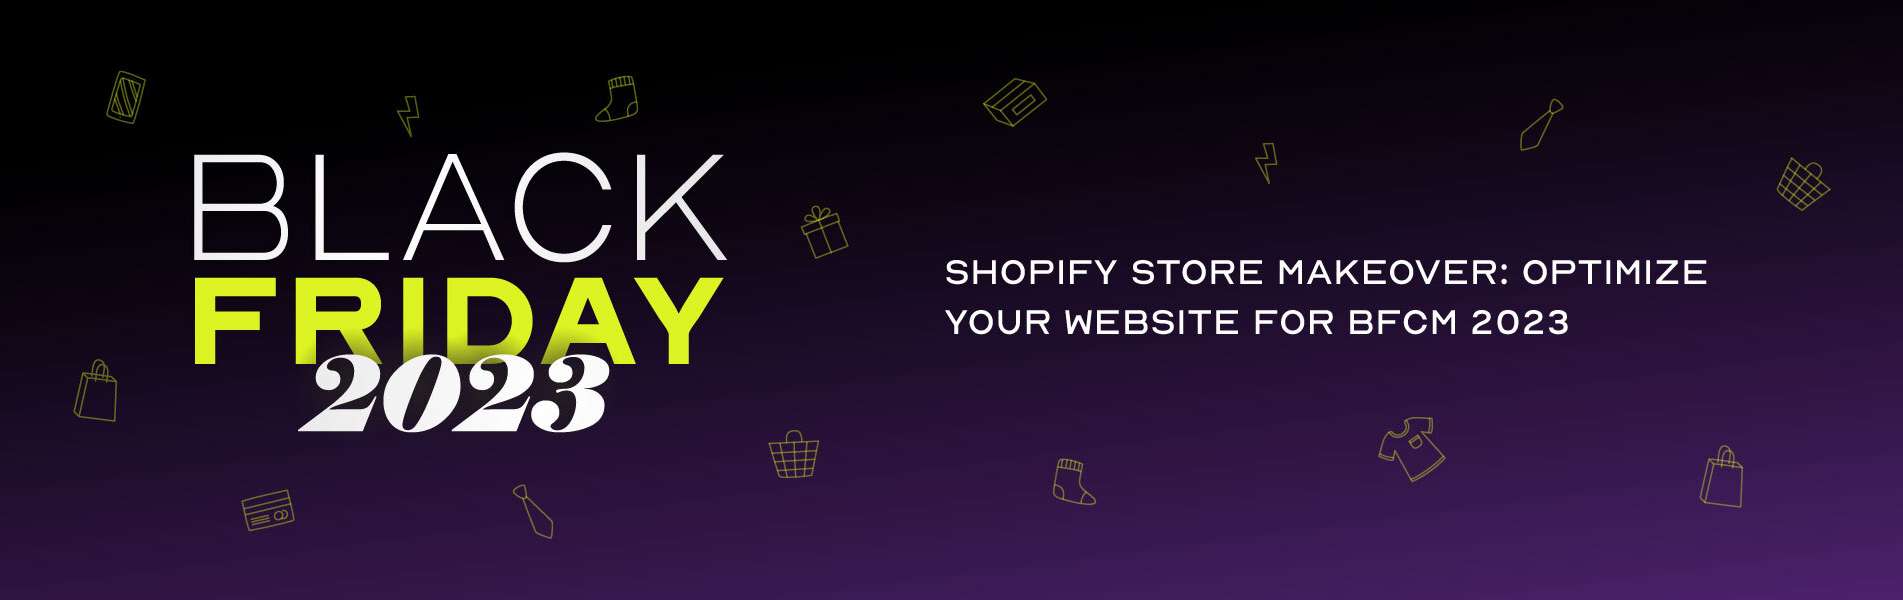 Shopify store makeover BFCM